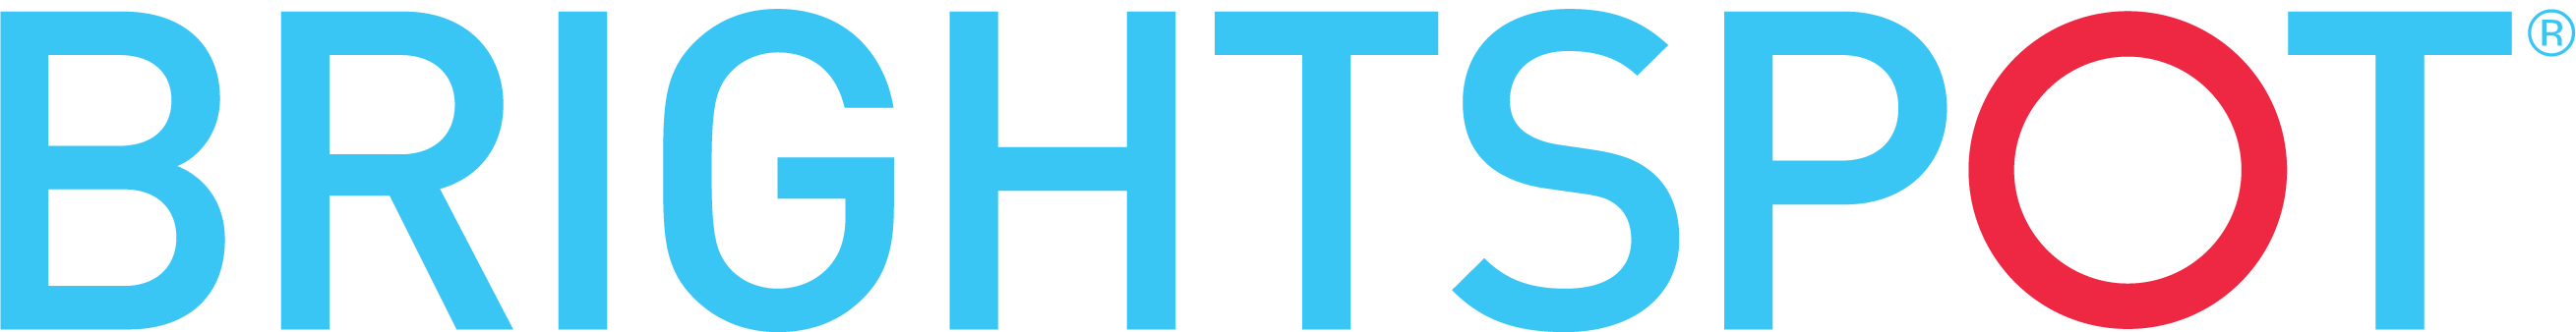 Image of Brightspot logo